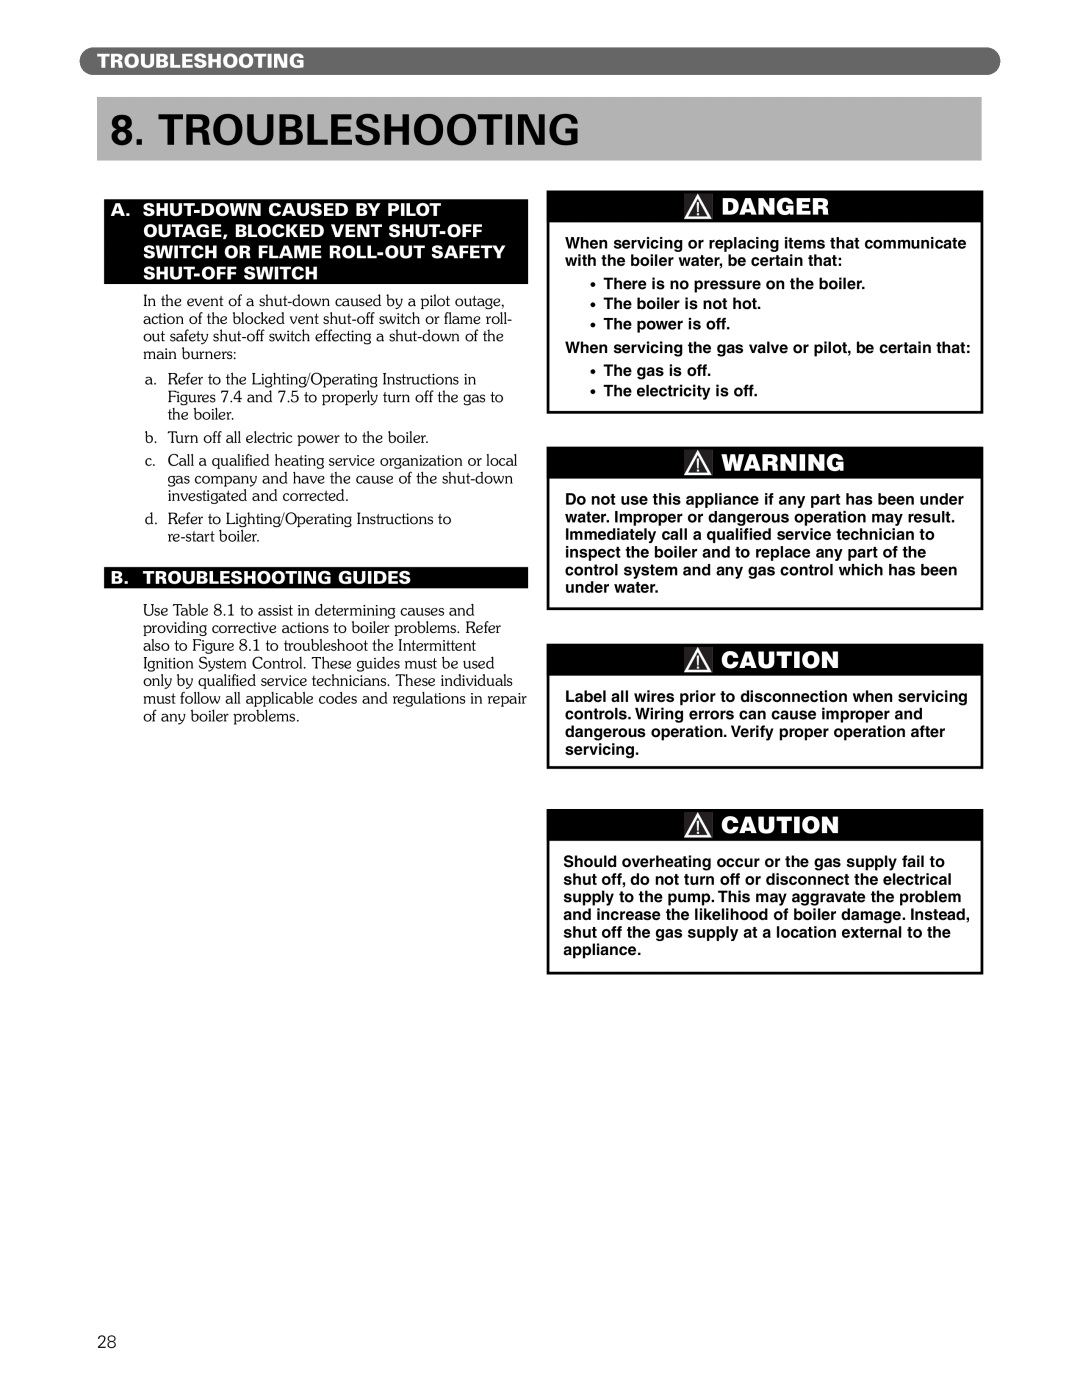 PB Heat MI/MIH series manual Danger, B.Troubleshooting Guides 